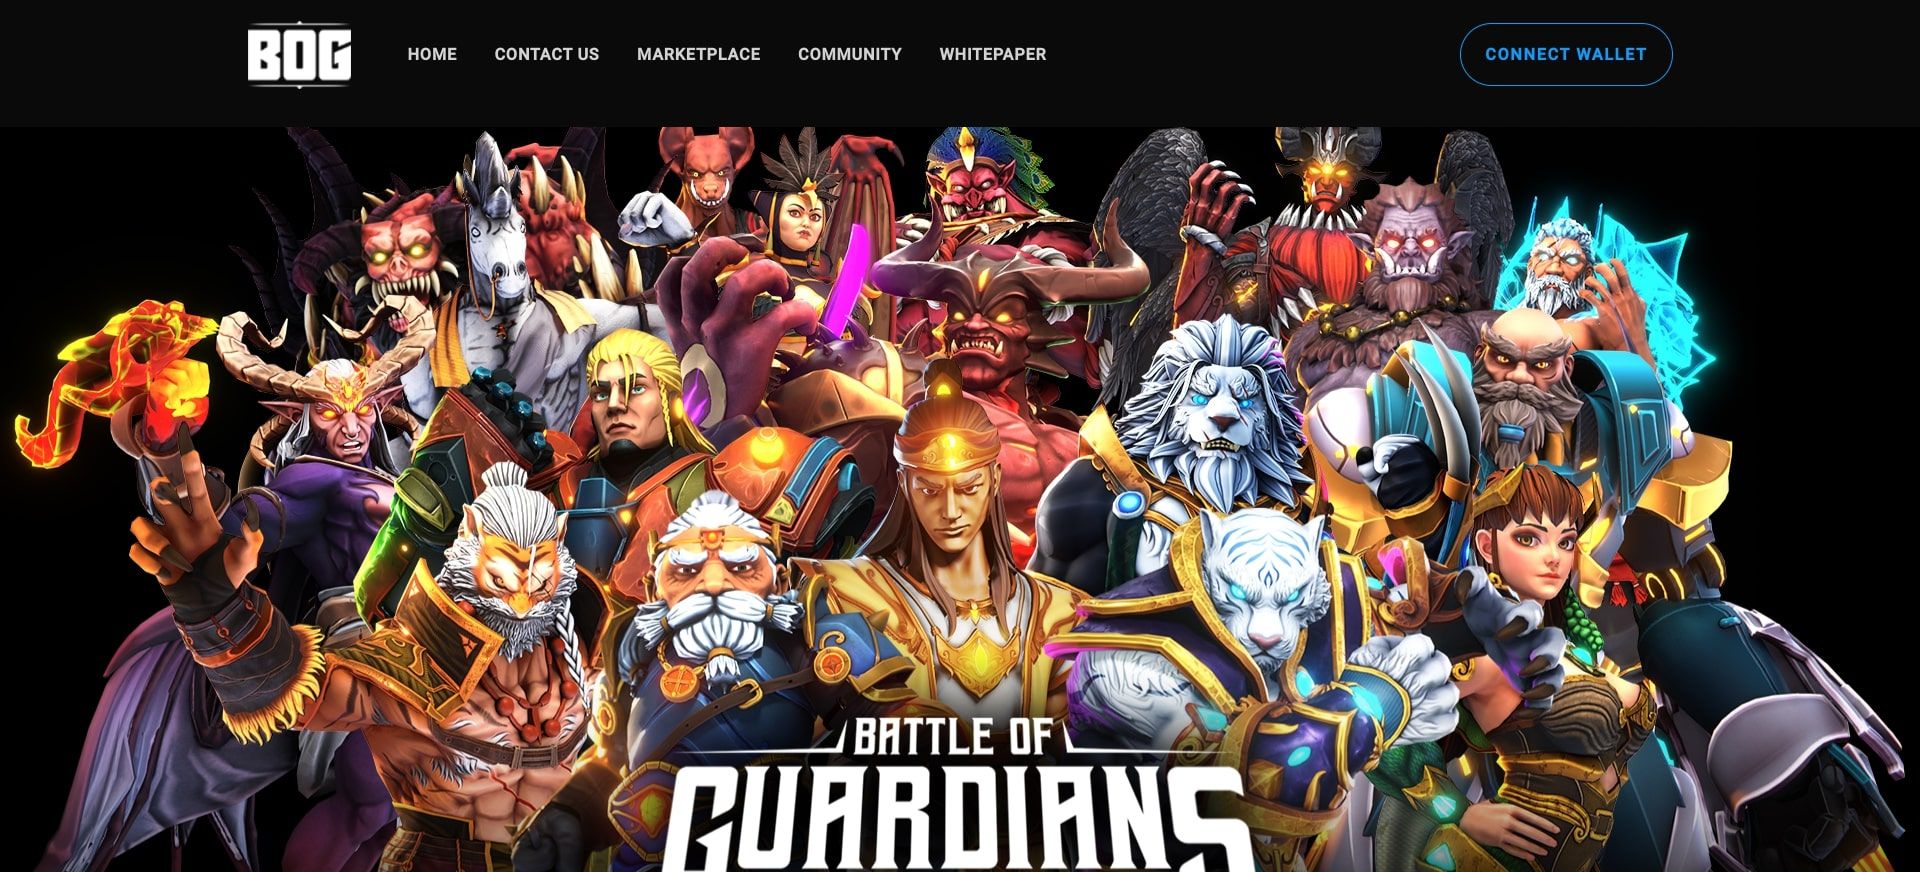 battle of guardians website homepage screenshot